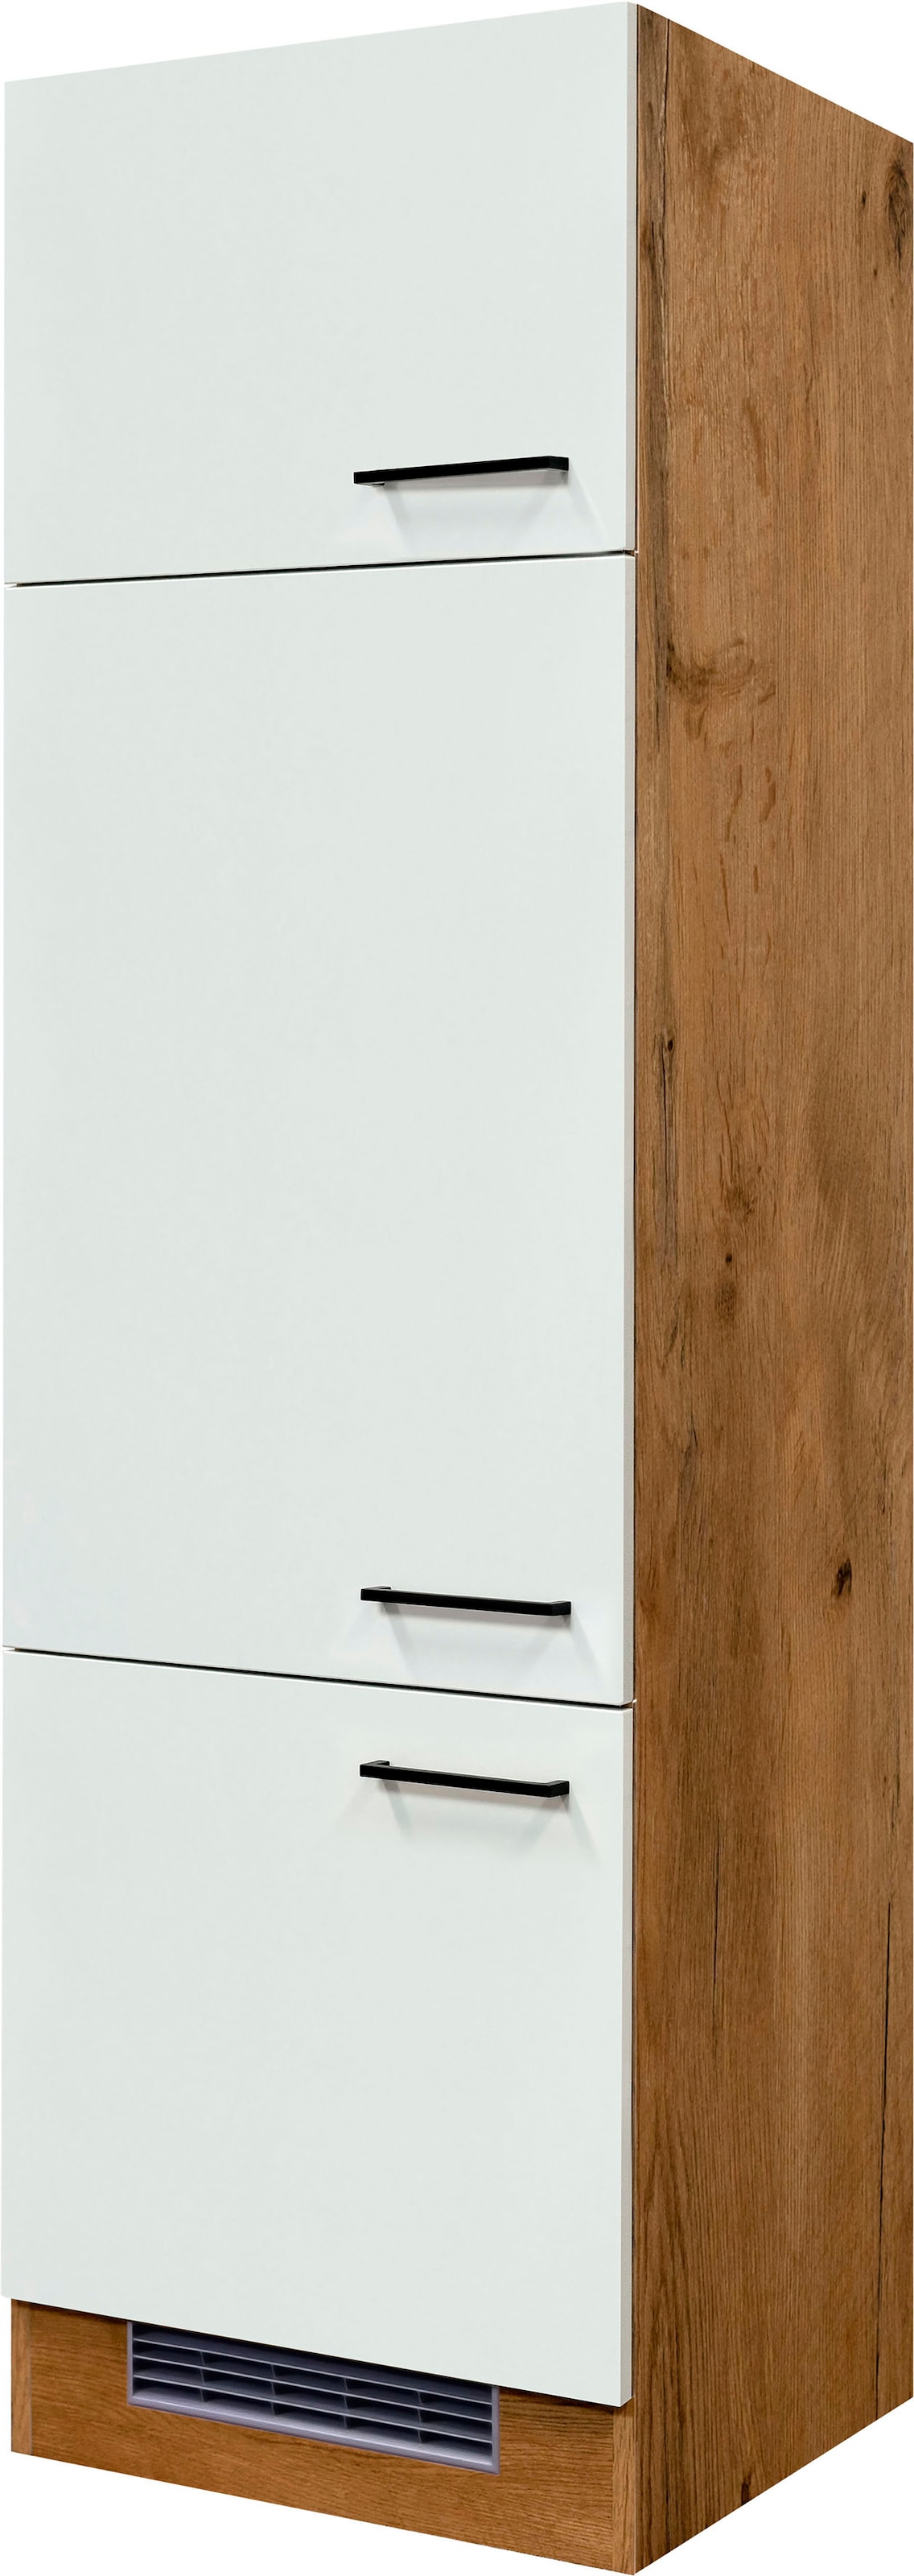 Flex-Well Küche »Vintea«, 60 cm breit, 200 cm hoch, inklusive Kühlschrank